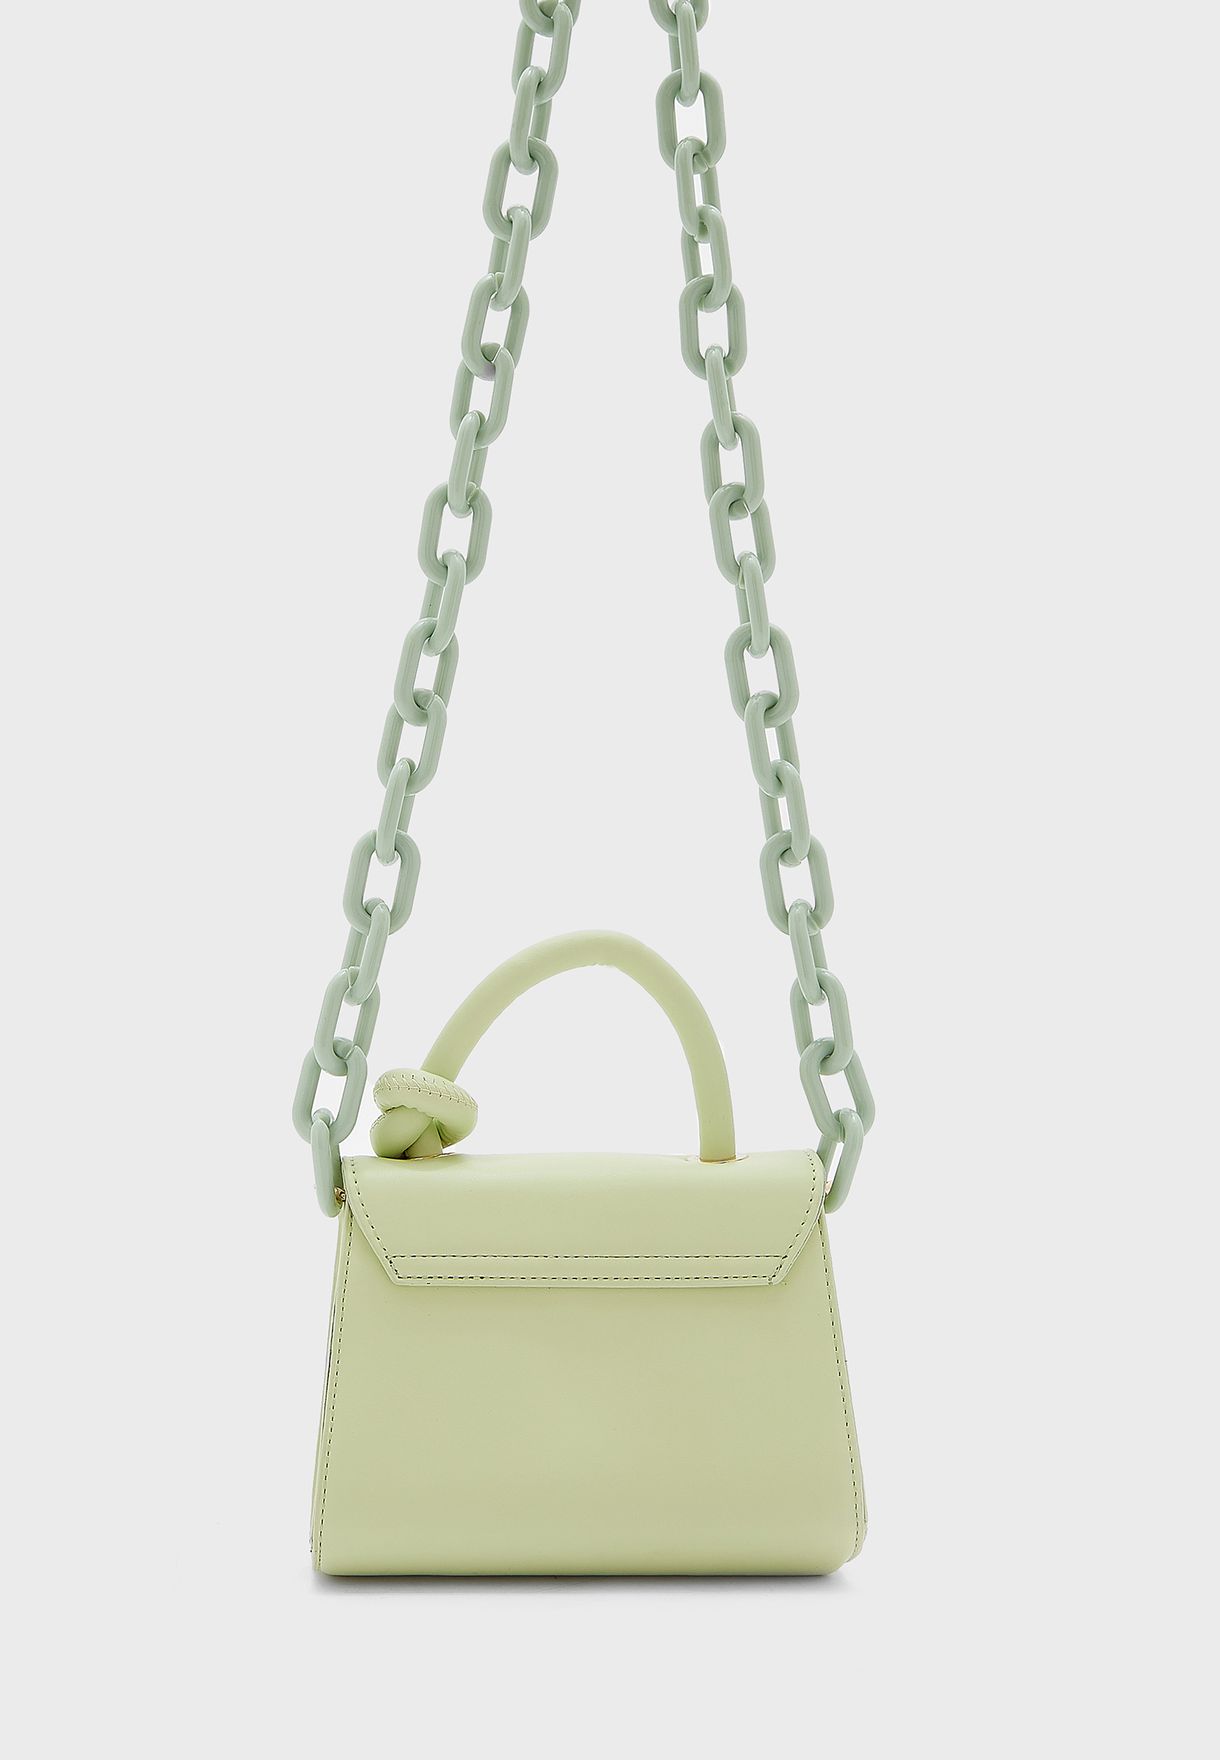 Mini Handbag With Knot Handle And Chain Strap